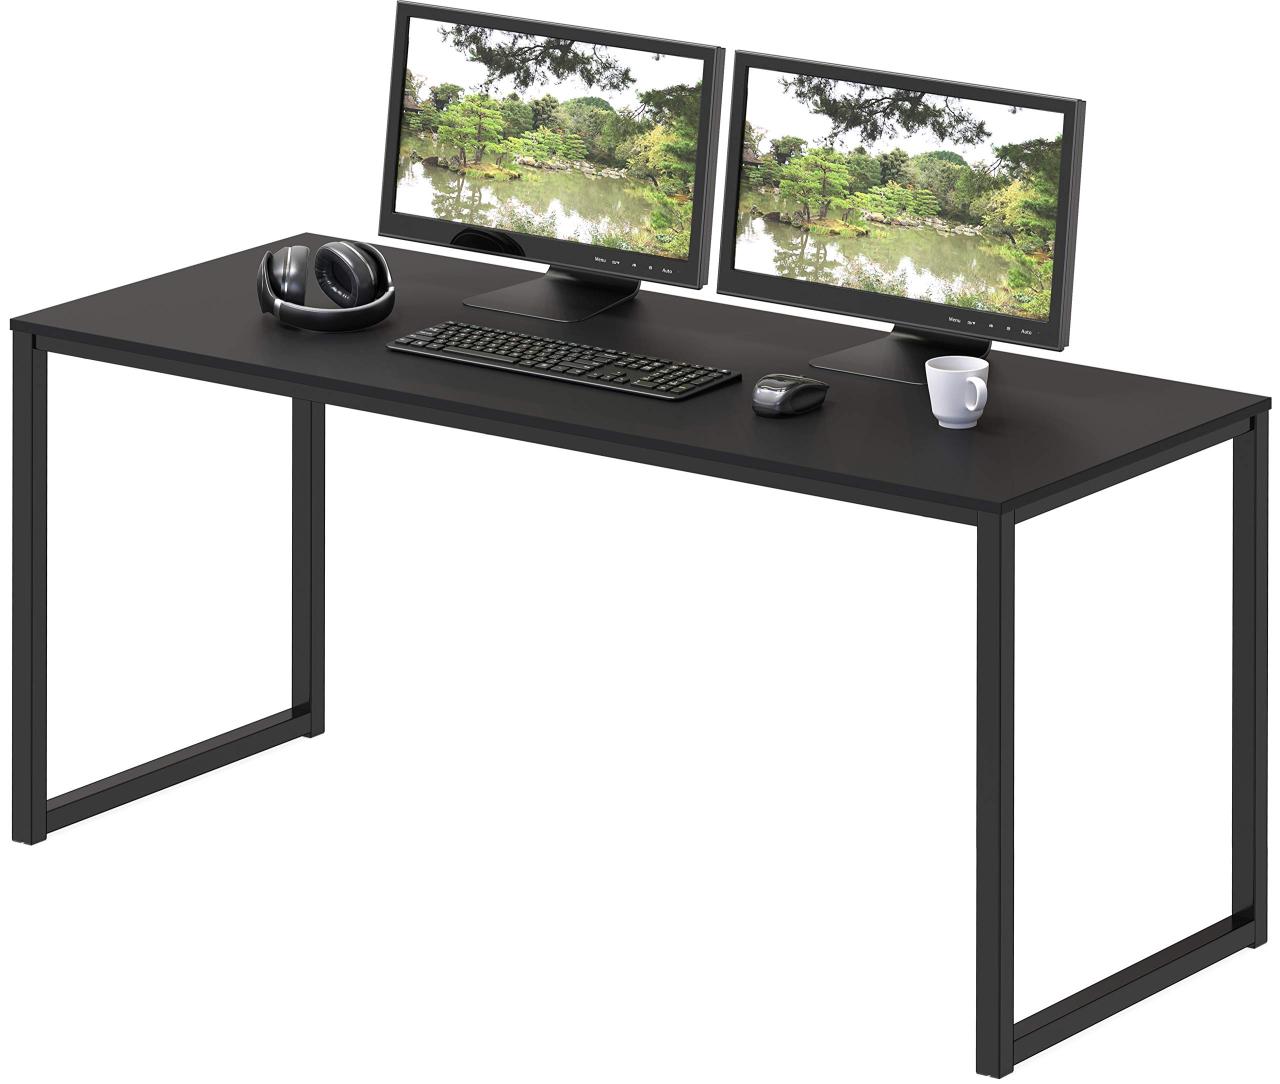 Shw Home Office Computer Desk, Black, 48-Inch (121 Cm W X 60 Cm D) :  Amazon.Ca: Home